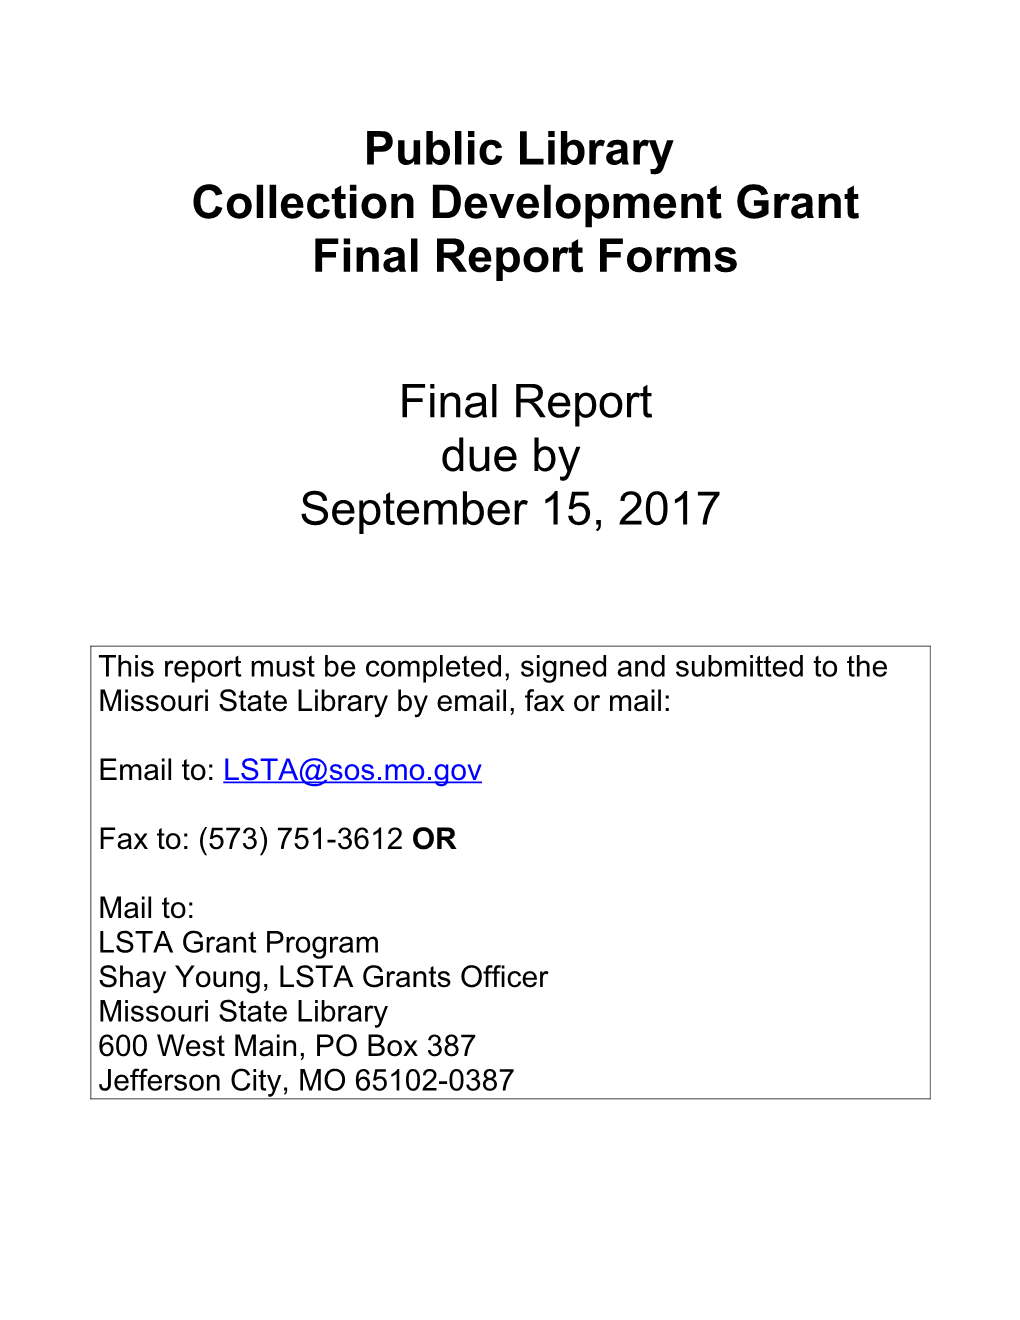 Collection Development Grant